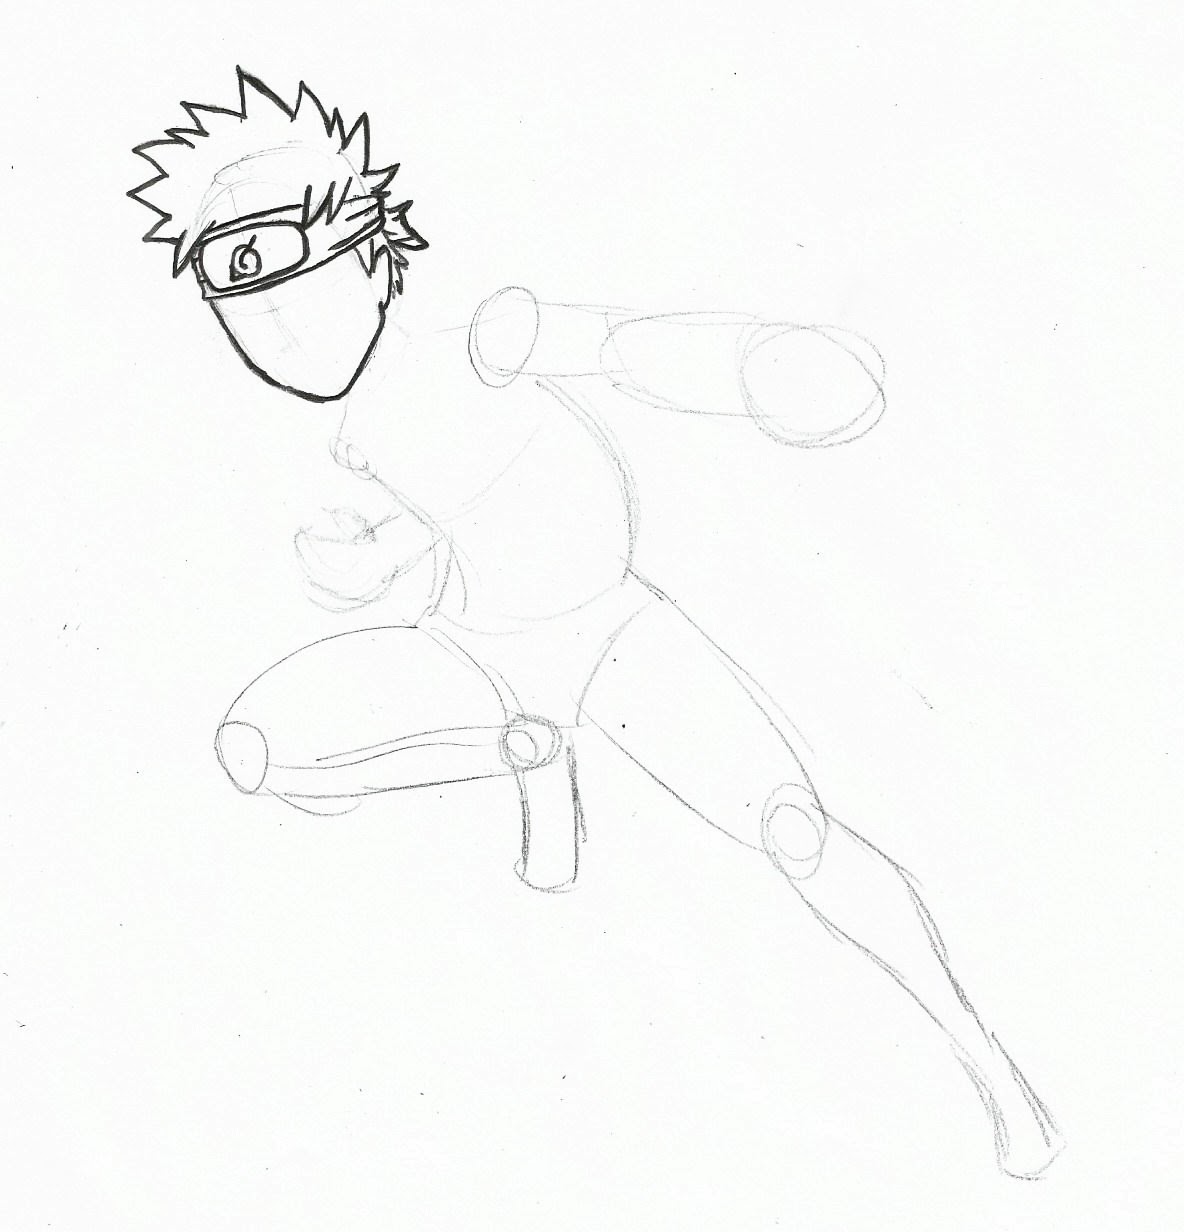 Como desenhar o Naruto chibi passo a passo (corpo inteiro) 